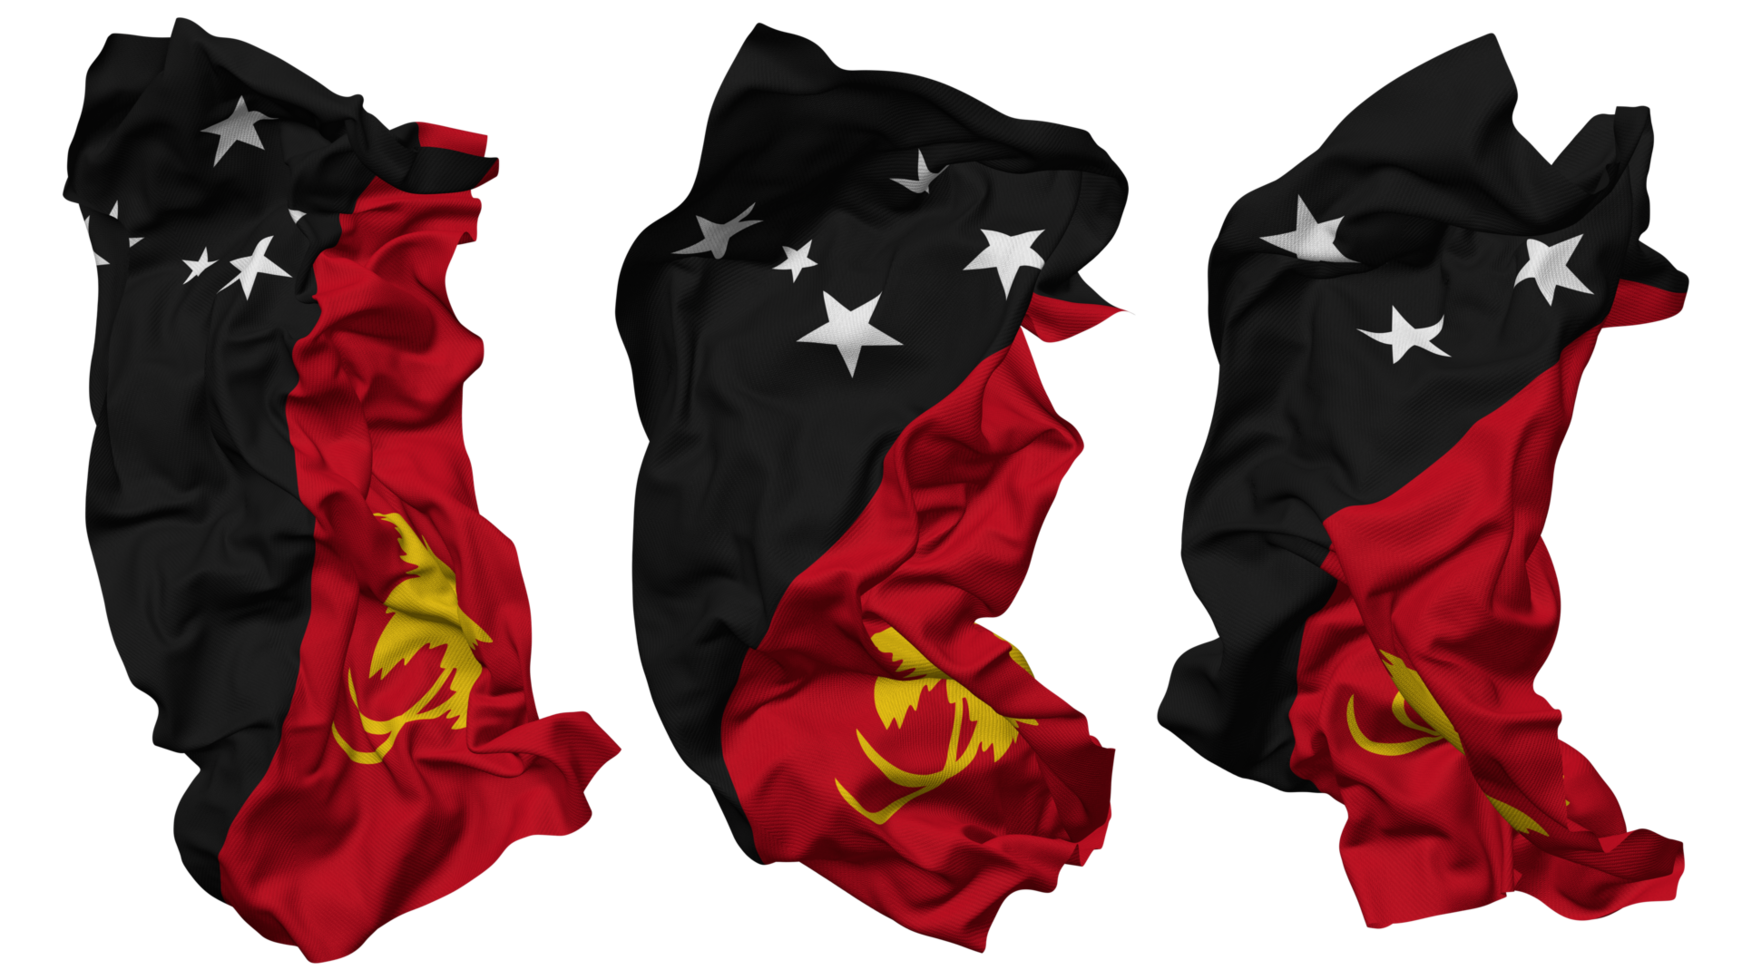 Papuasia nuevo Guinea bandera olas aislado en diferente estilos con bache textura, 3d representación png